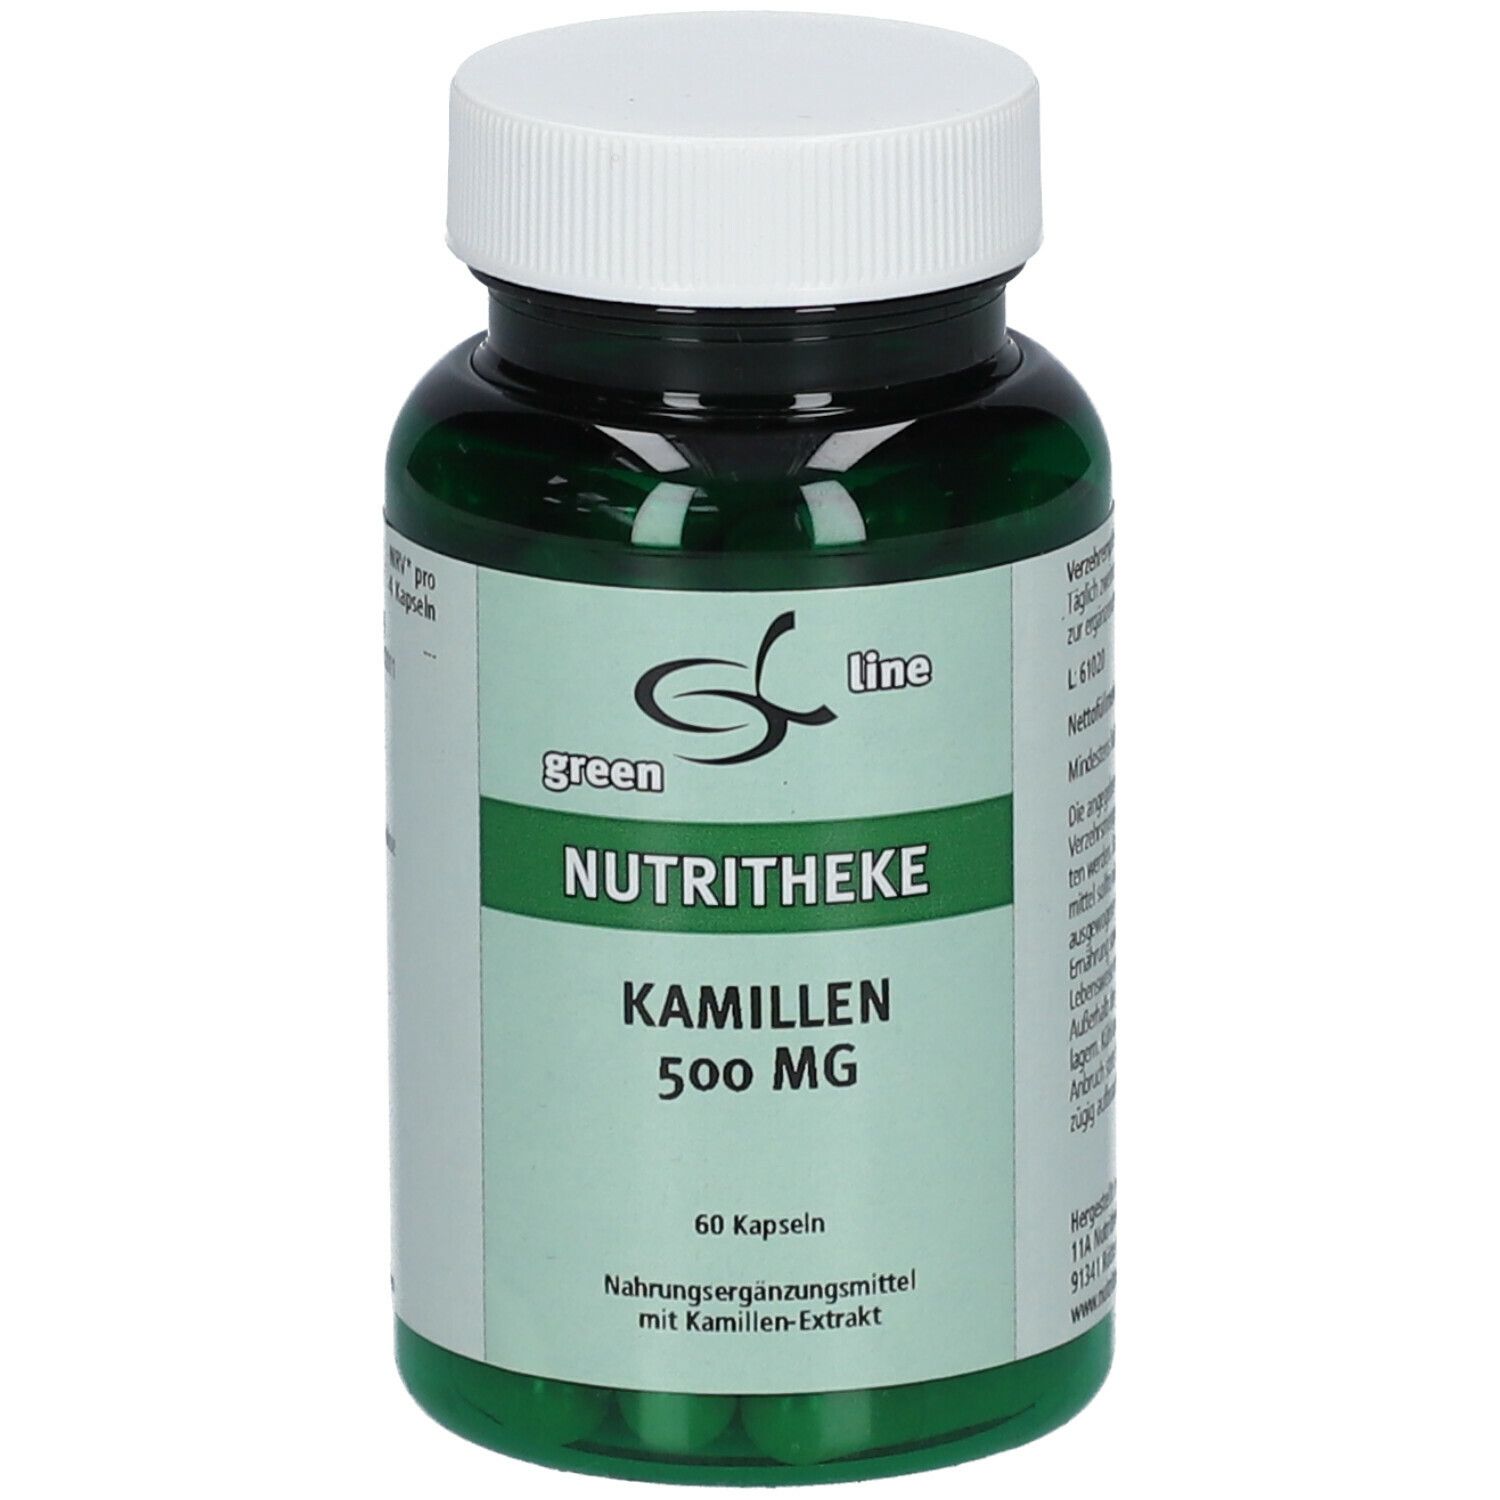 11 A Nutritheke GmbH green line Kamillen 500 mg